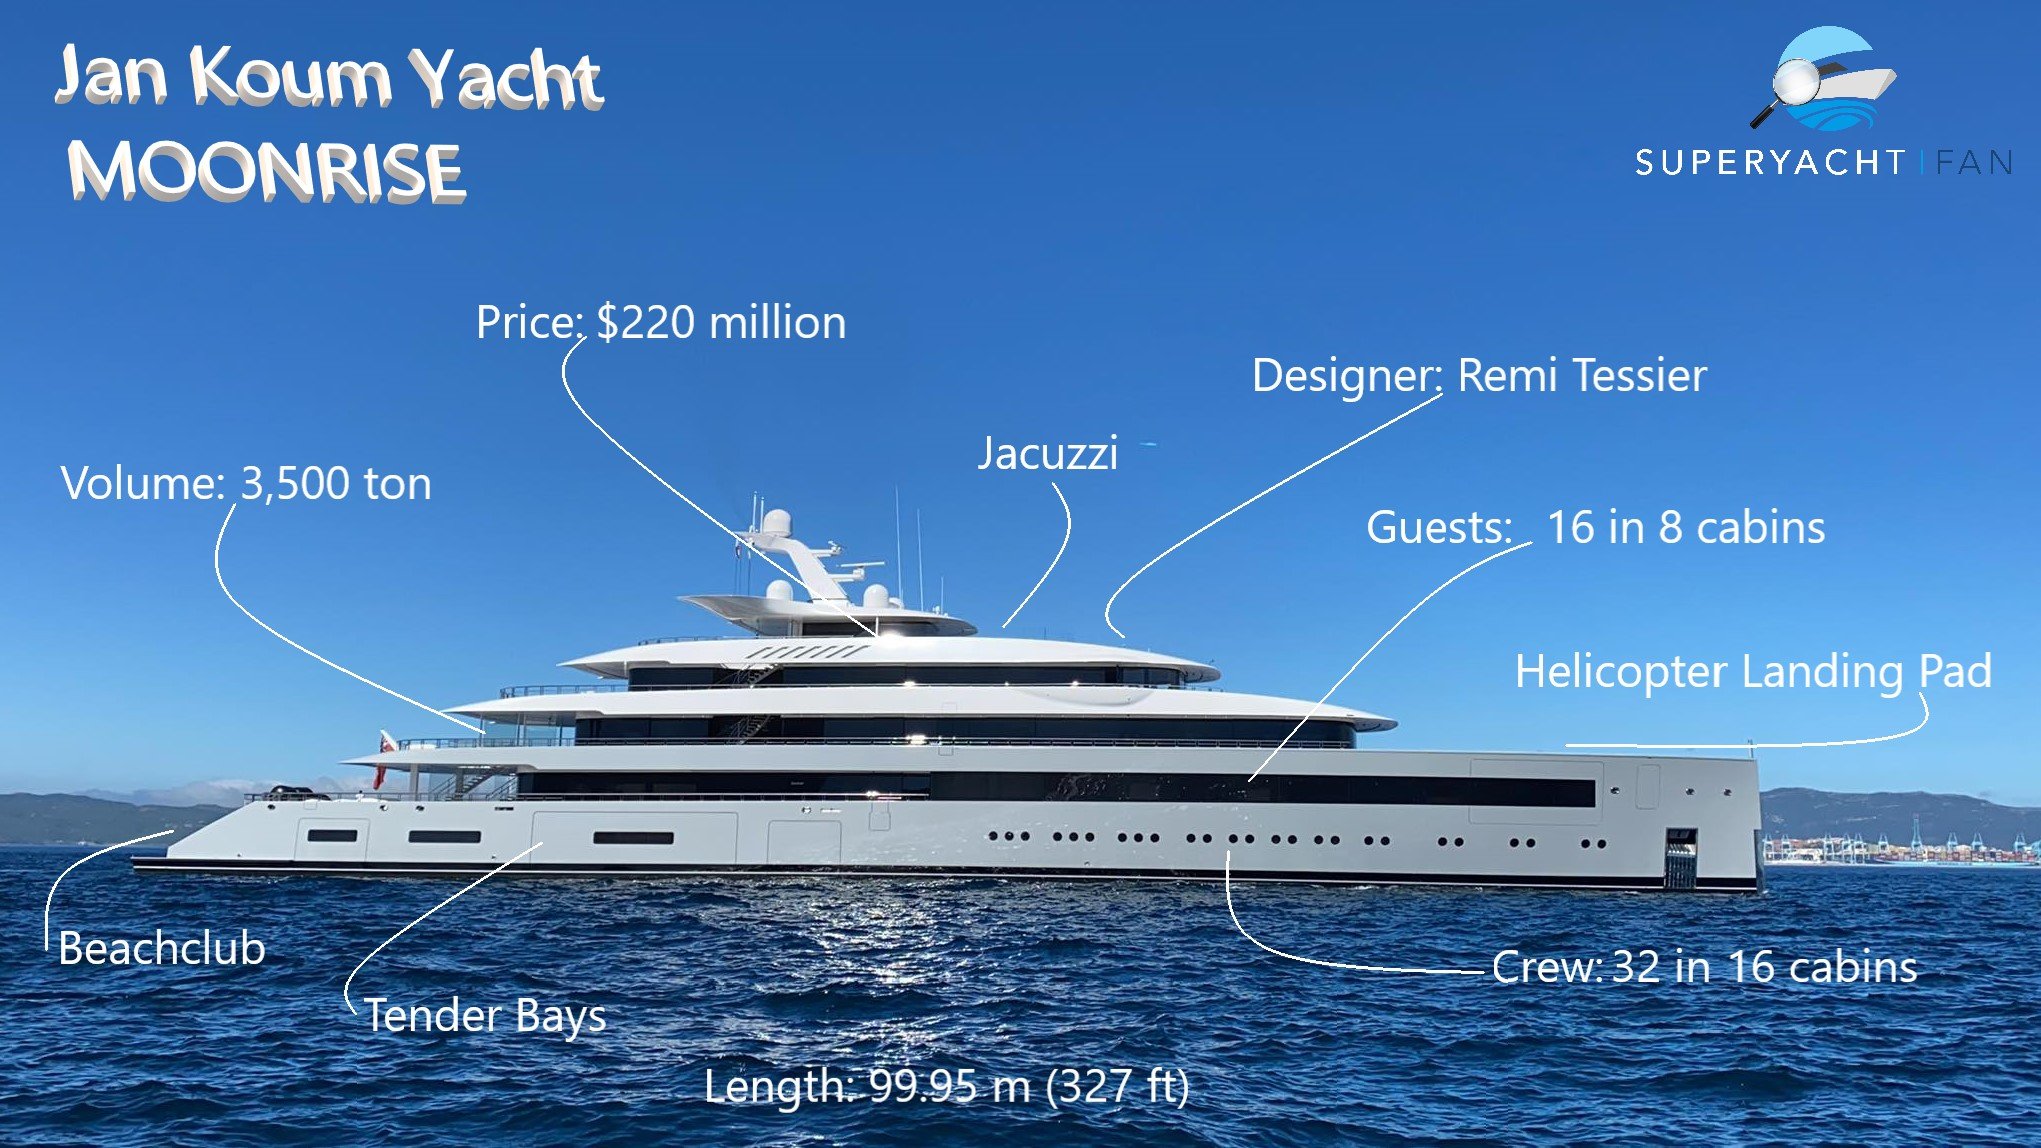 Jan Koum Yacht MOONRISE